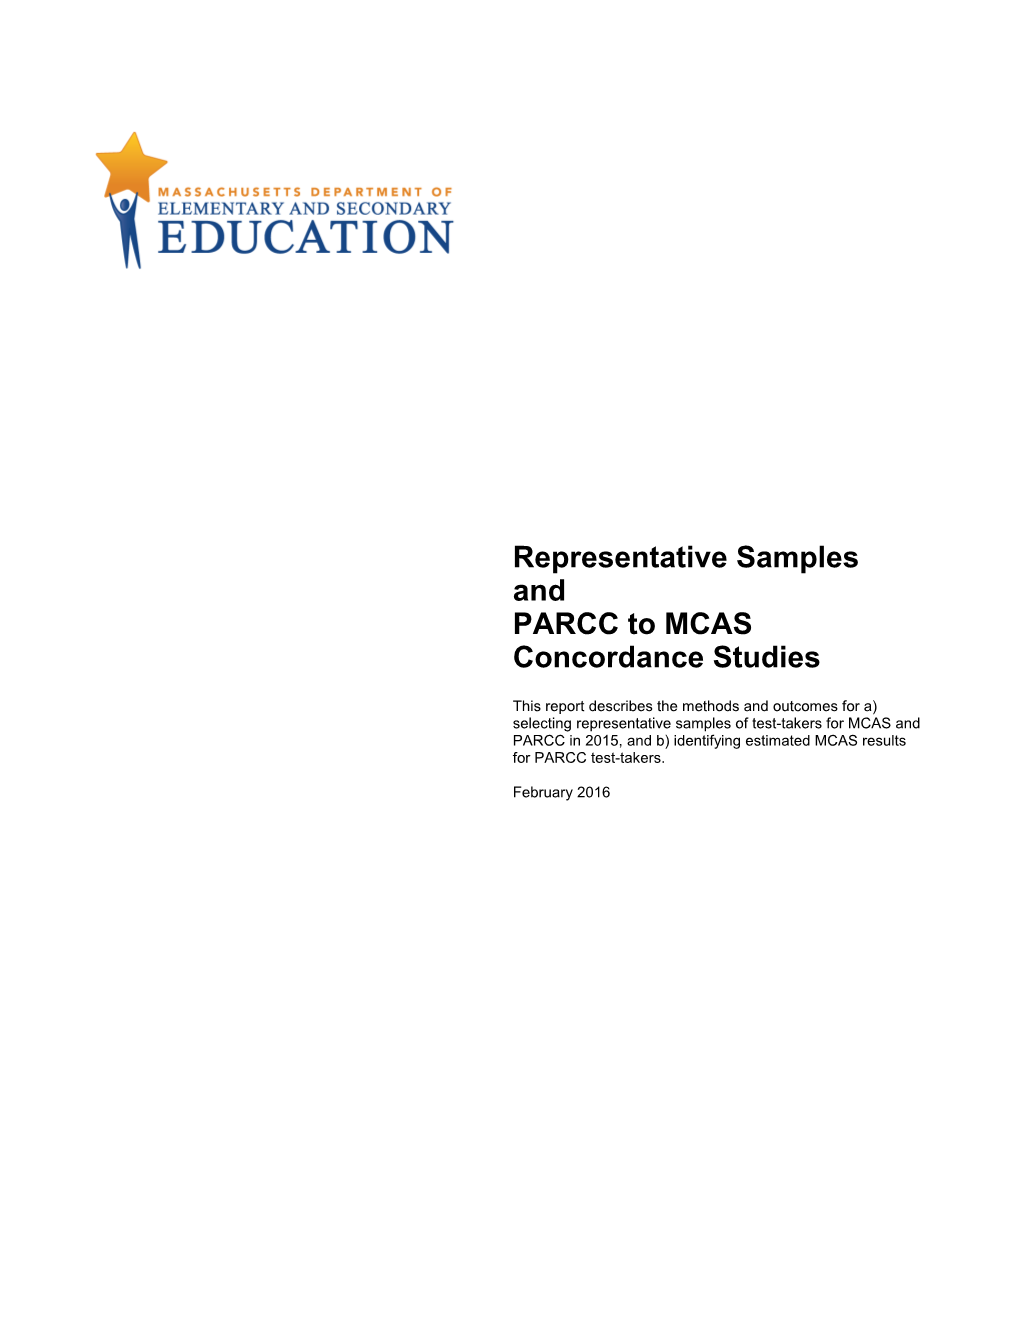 Representative Samples and PARCC to MCAS Concordance Studies, 2016